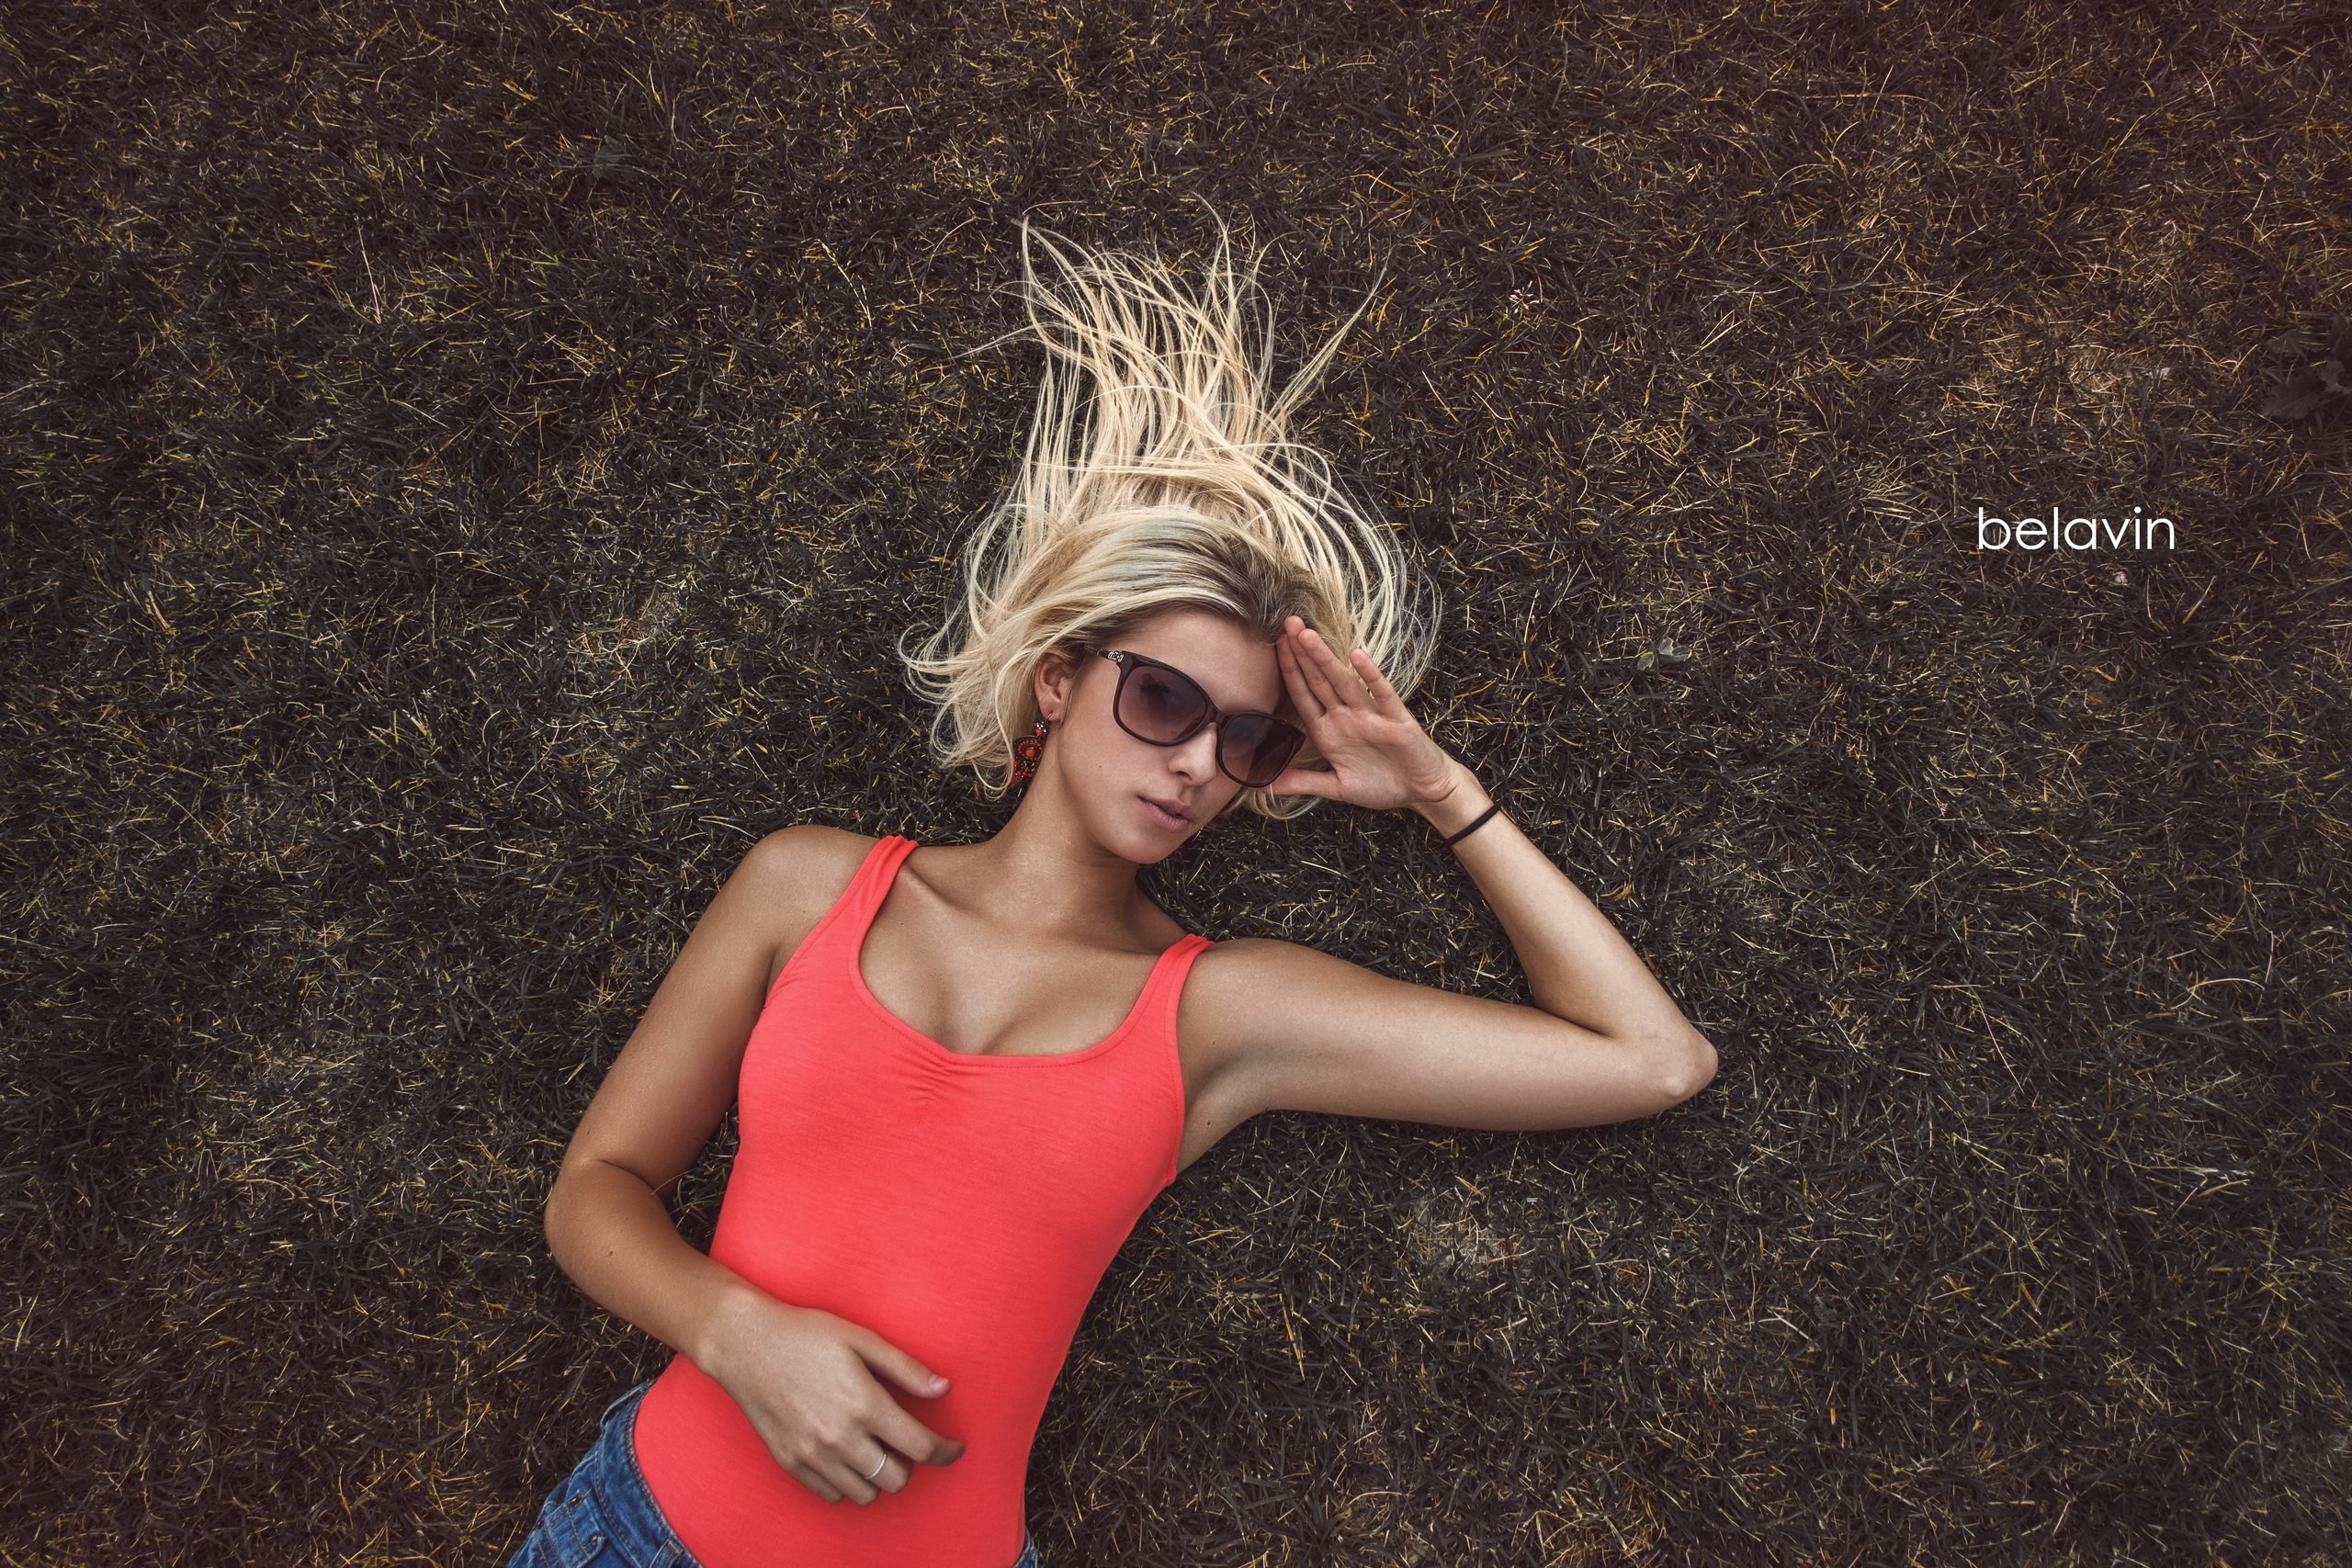 Women Blonde Sunglasses Hands On Head Grass Portrait Alexander Belavin Armpits Red Tank Top 2560x1707